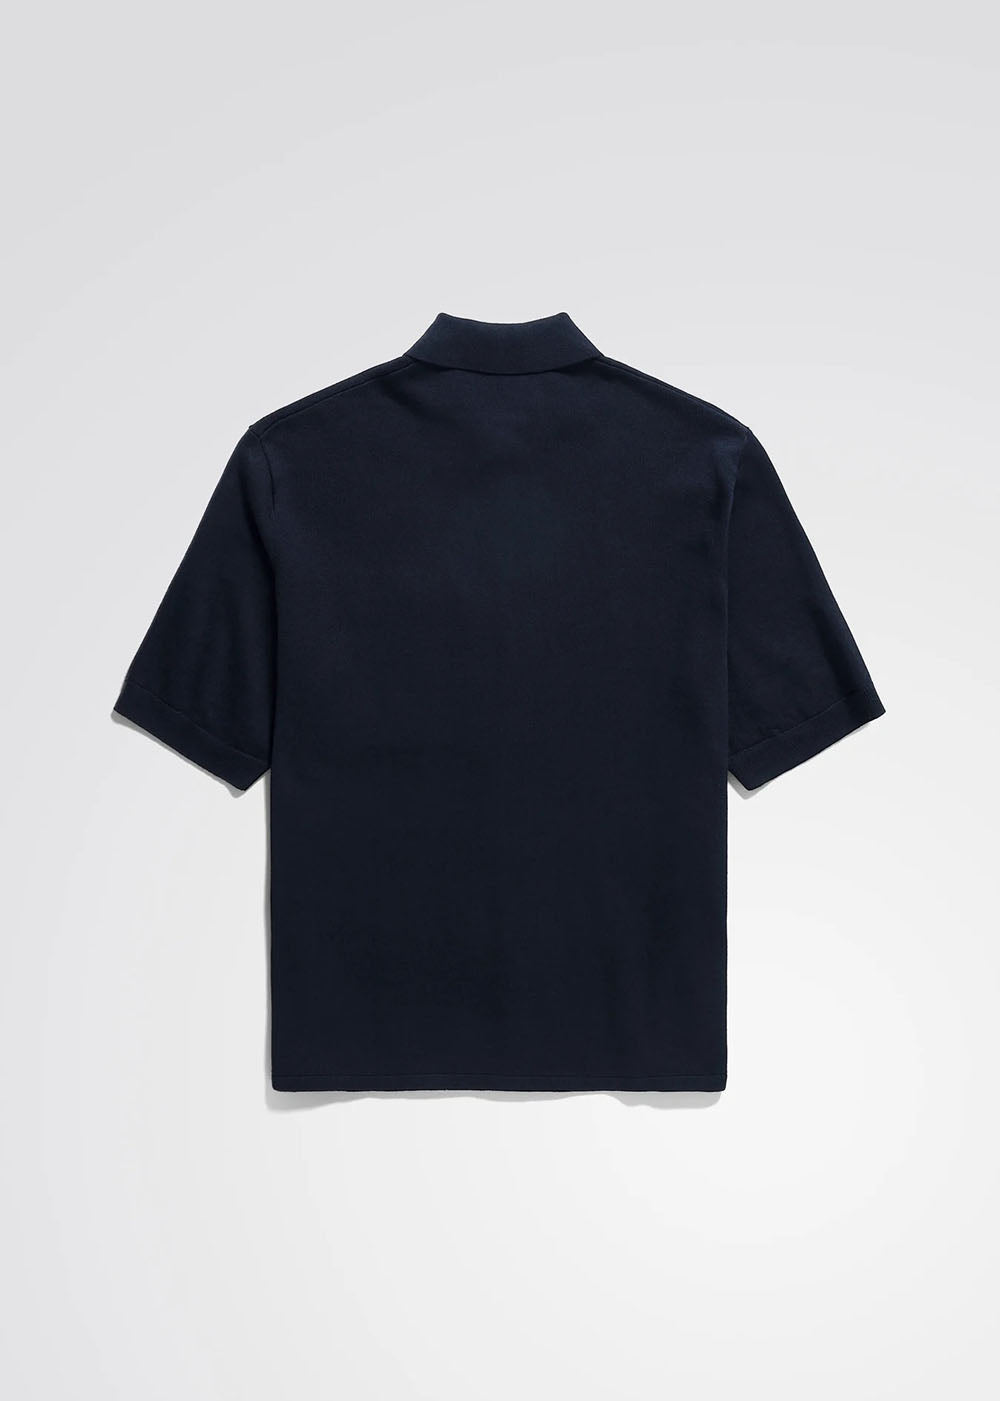 Rollo Cotton Linen SS Shirt - Dark Navy - Norse Projects Canada - Danali - N45-0572